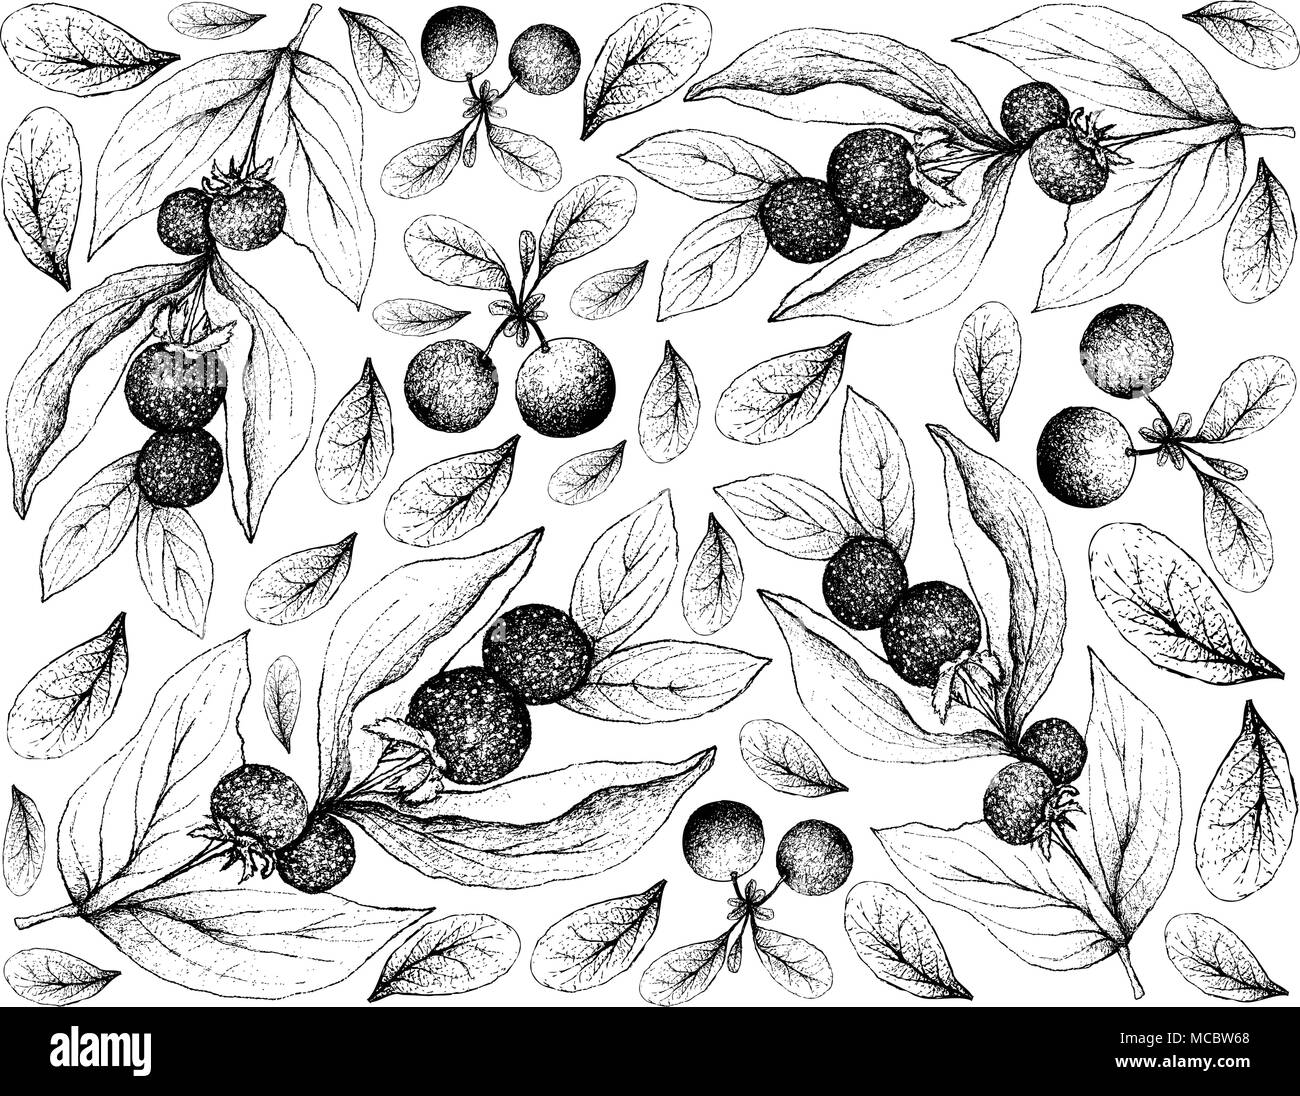 Berry Fruits, Illustration Wallpaper Background of Hand Drawn Sketch Fresh Ceylon Gooseberries and Bog Bilberry or Vaccinium Uiginosum Fruits. Stock Vector